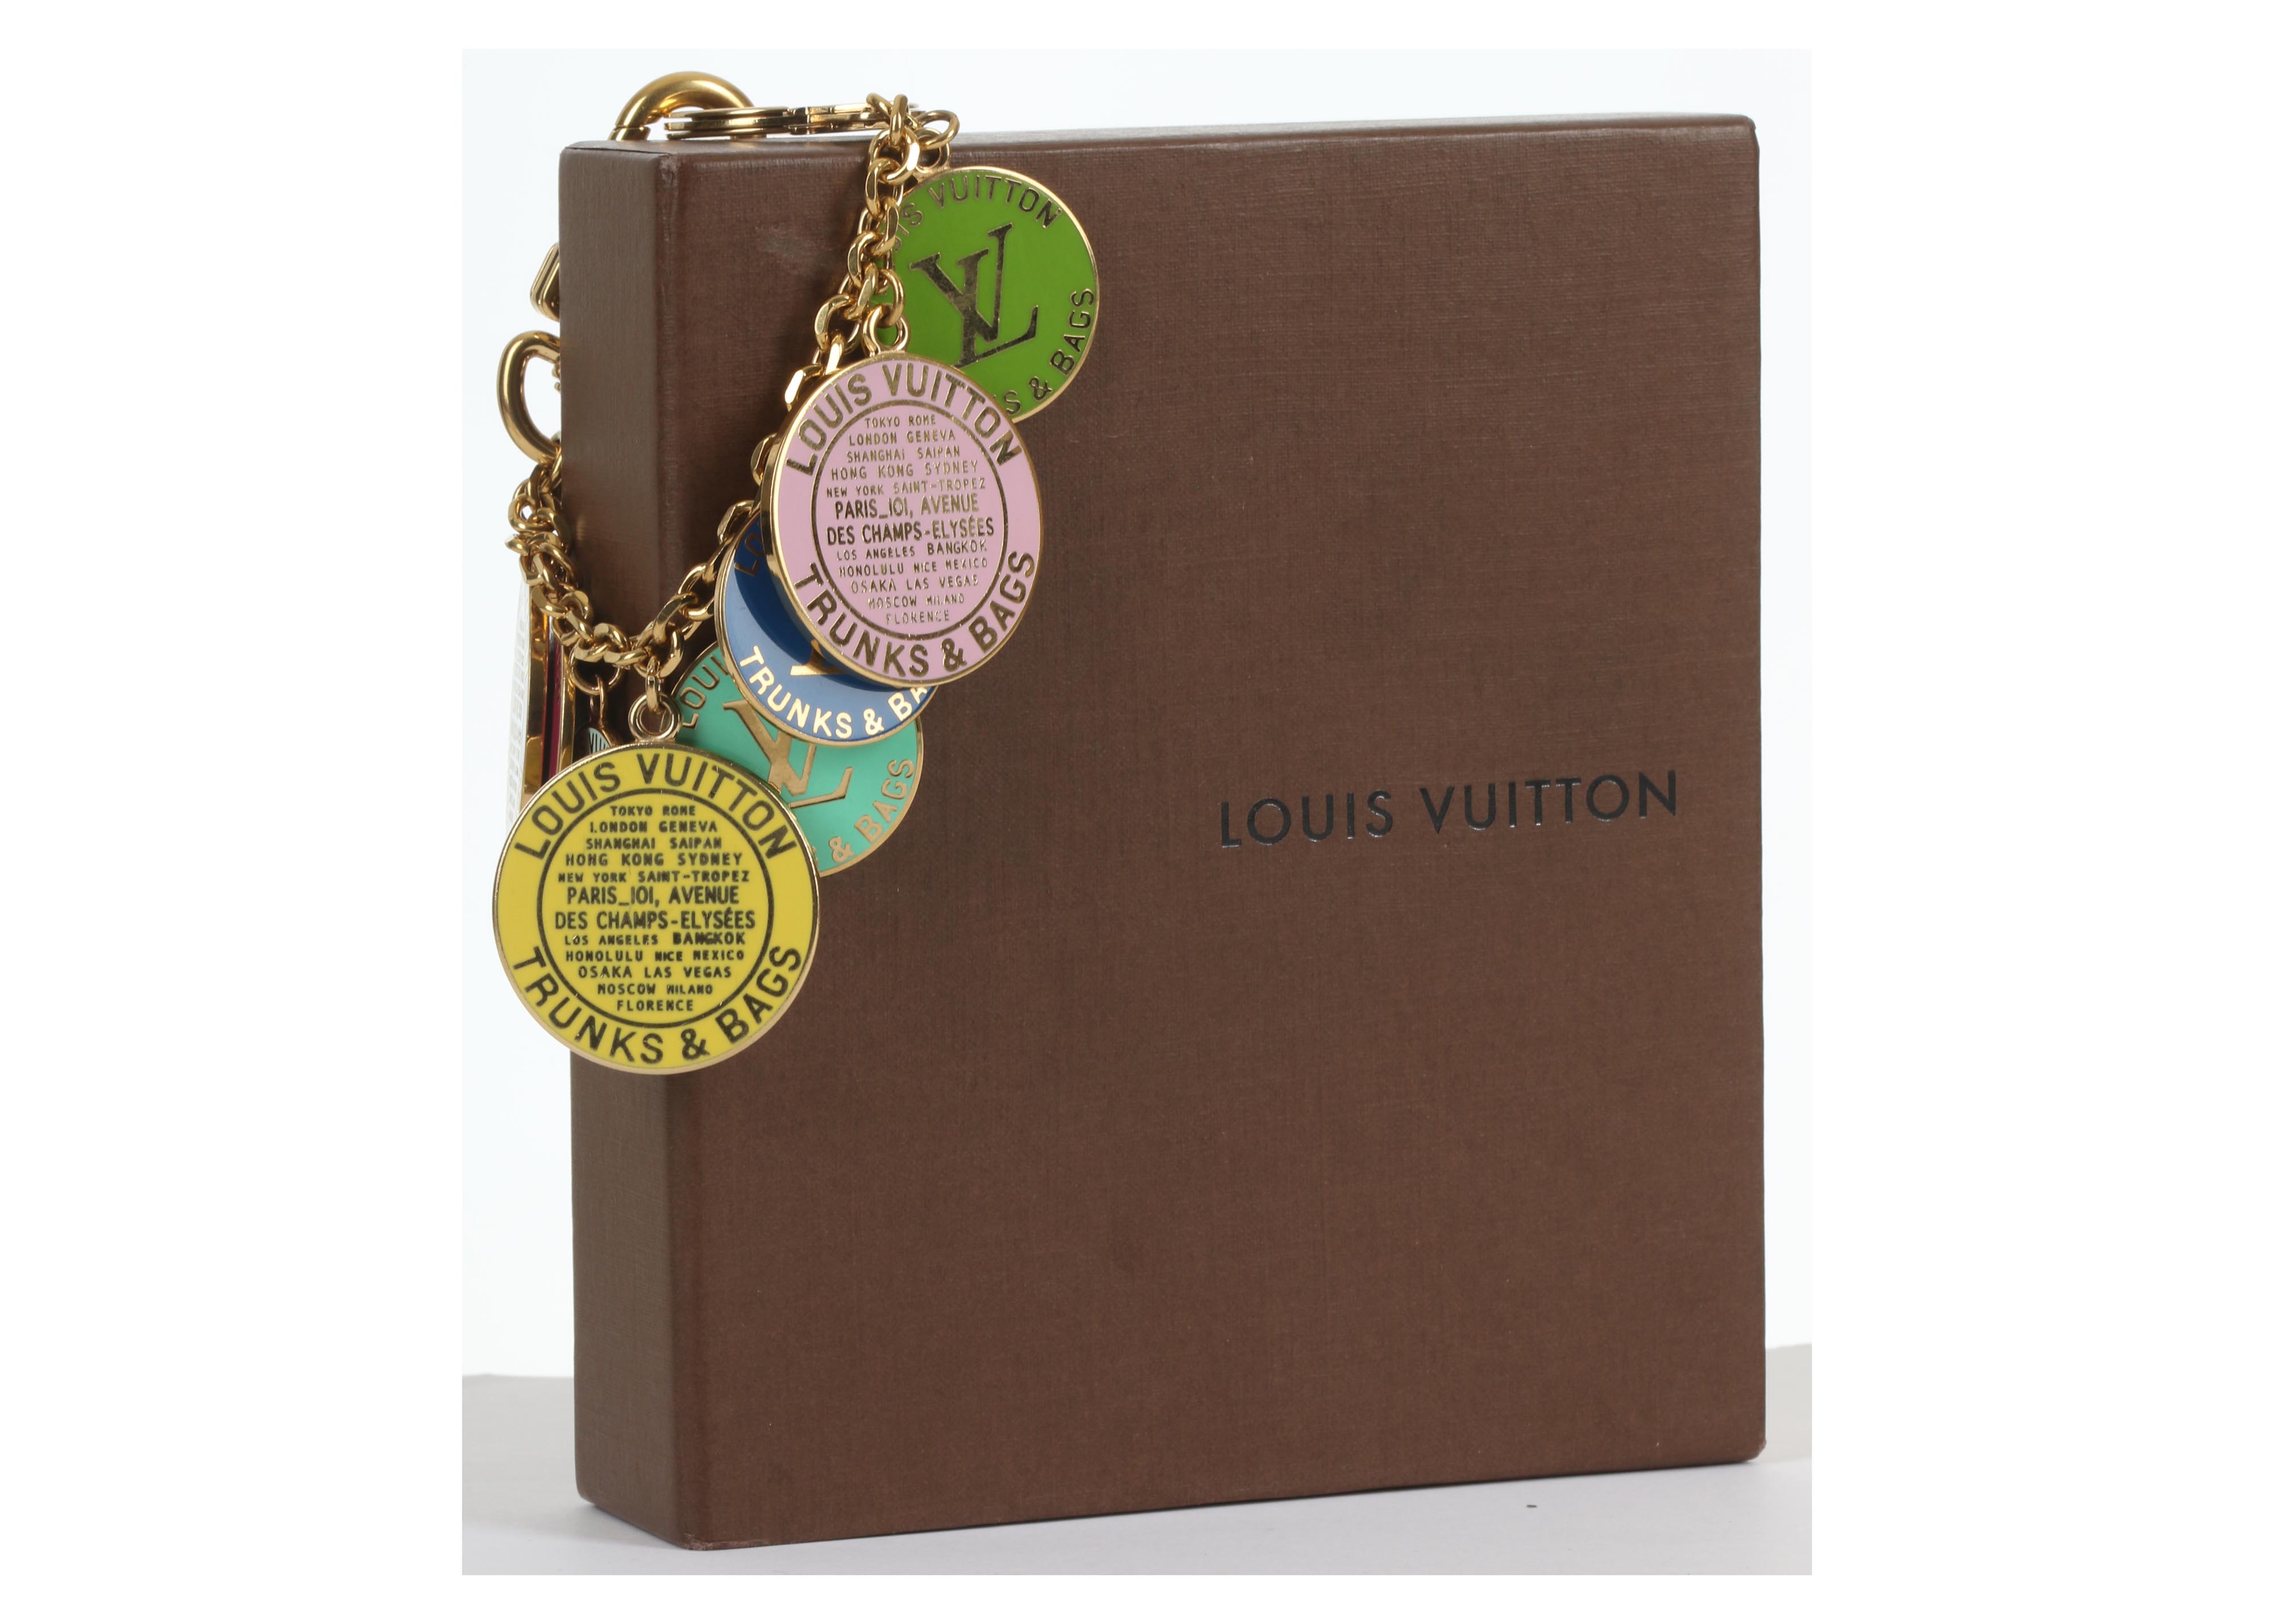 Sold at Auction: Louis Vuitton, Louis Vuitton Keychain Bag Charm